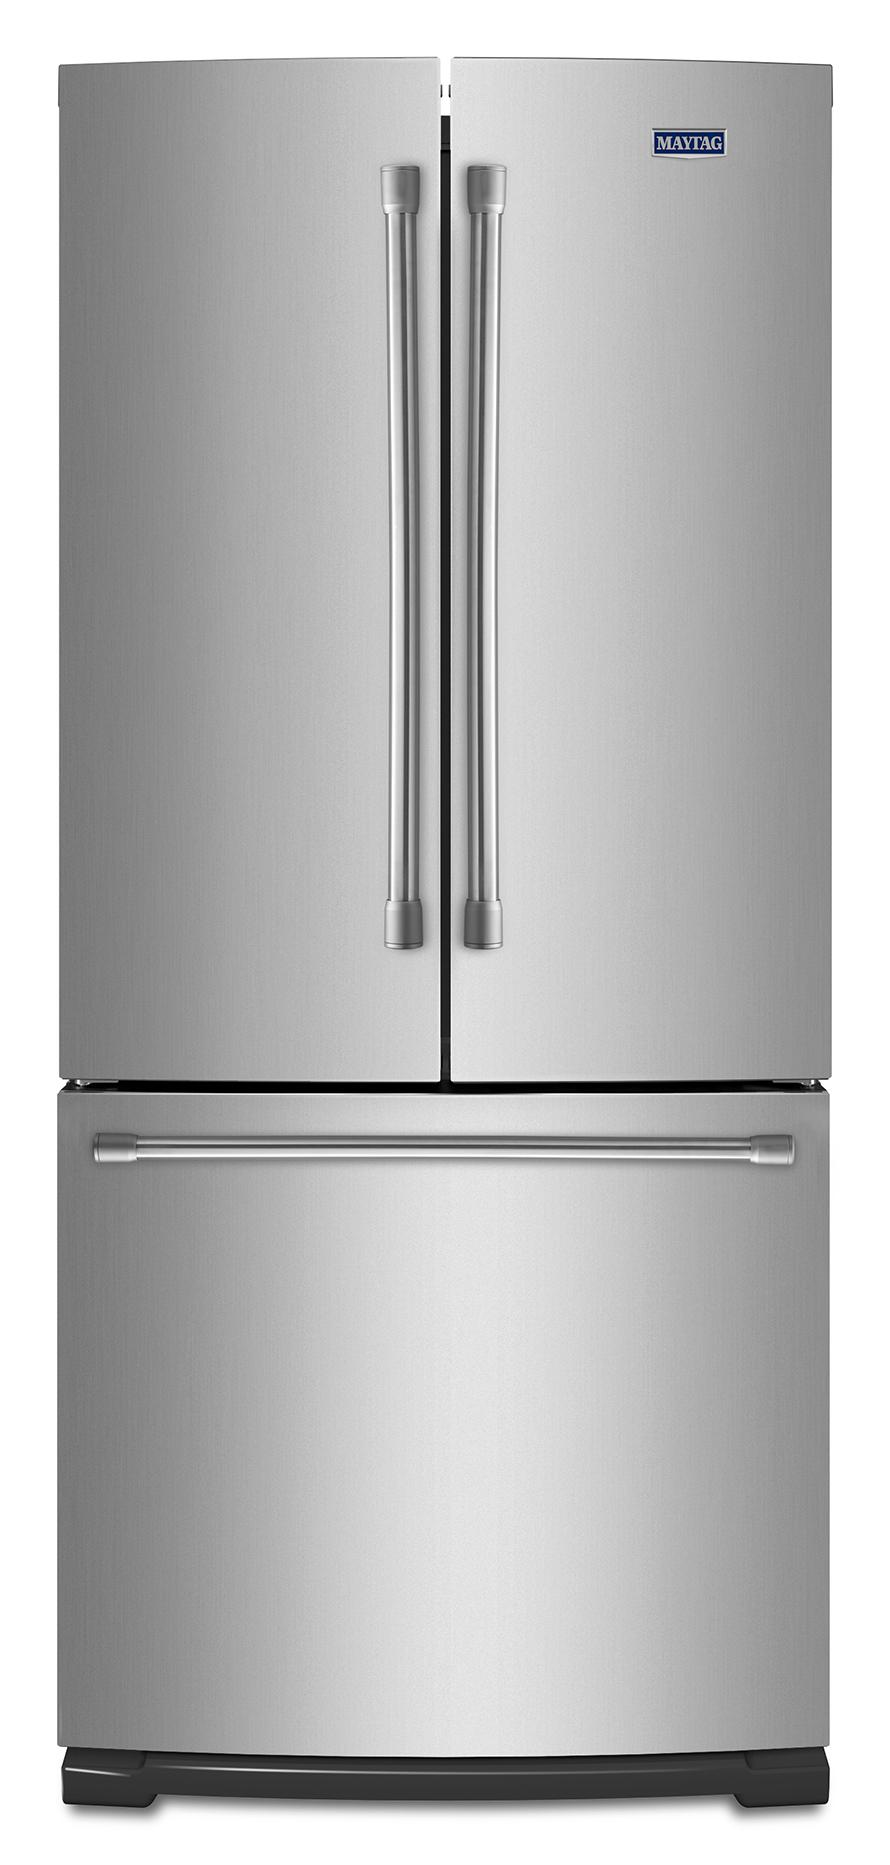 Refrigerador 80 cm ancho